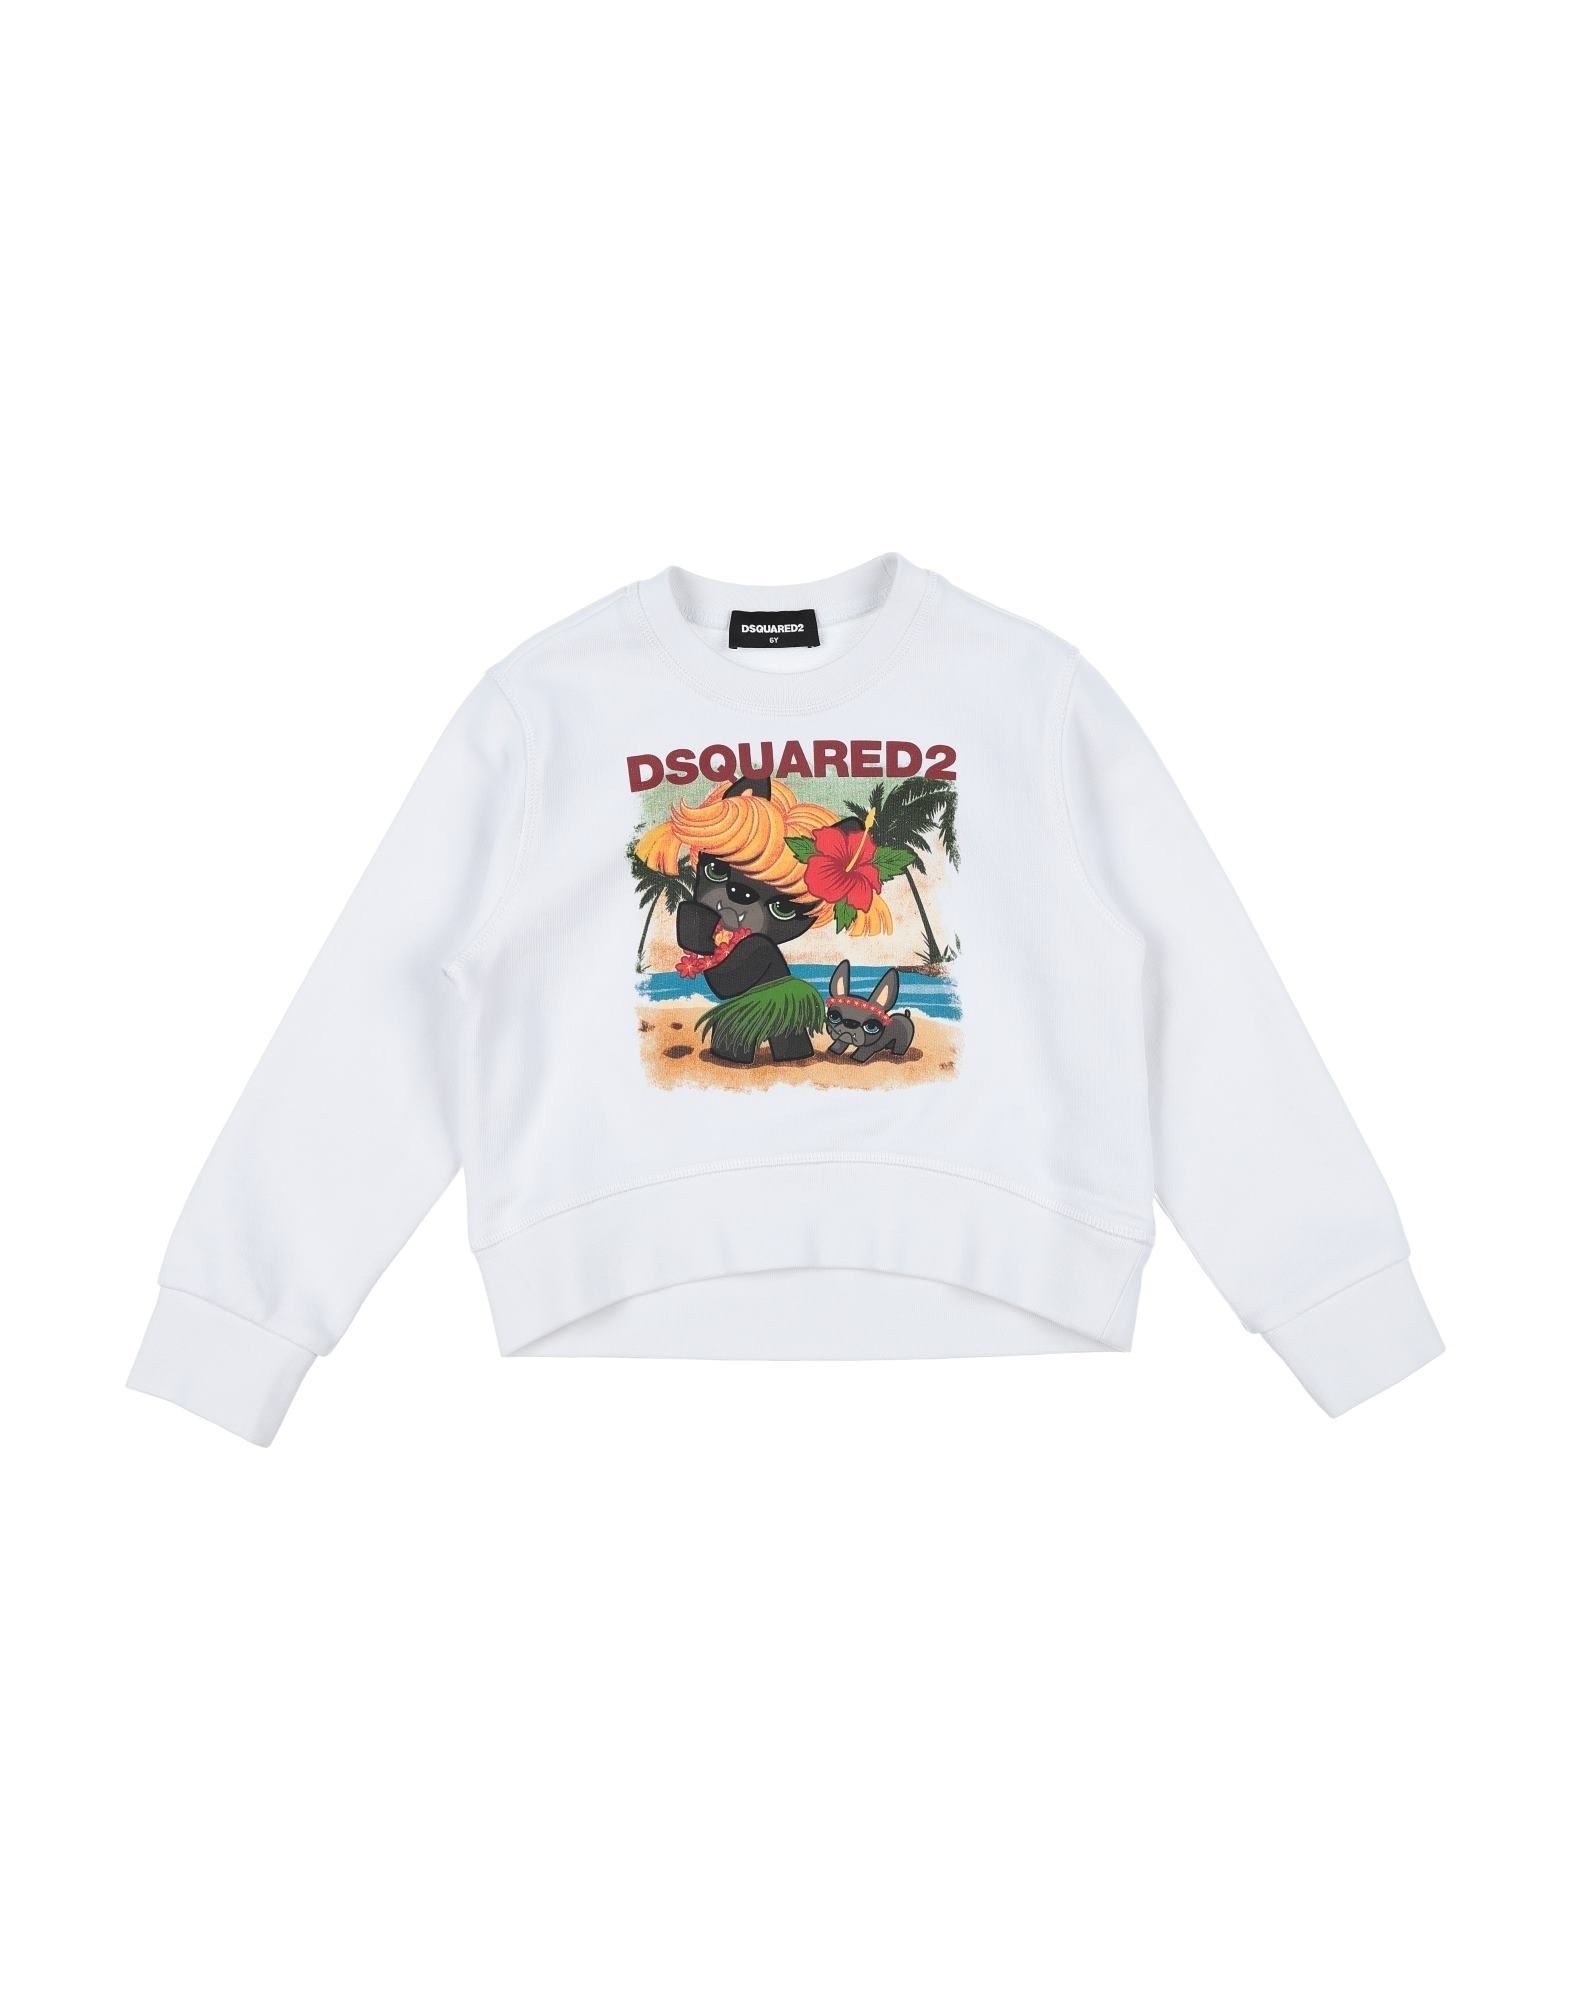 DSQUARED2 Sweatshirts - Item 12535014